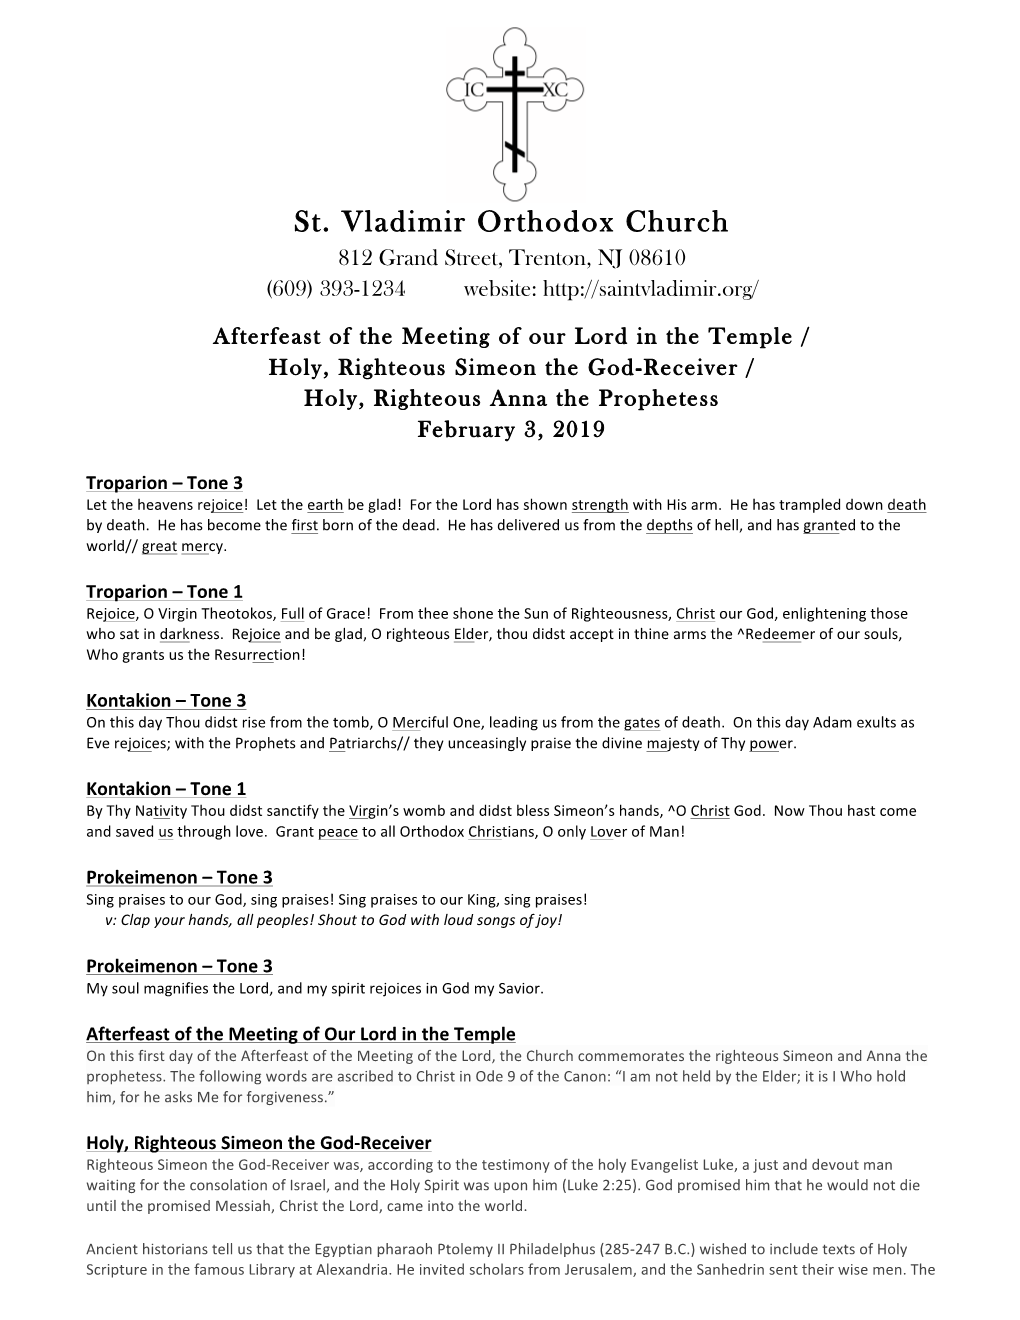 St. Vladimir Orthodox Church 812 Grand Street, Trenton, NJ 08610 (609) 393-1234 Website